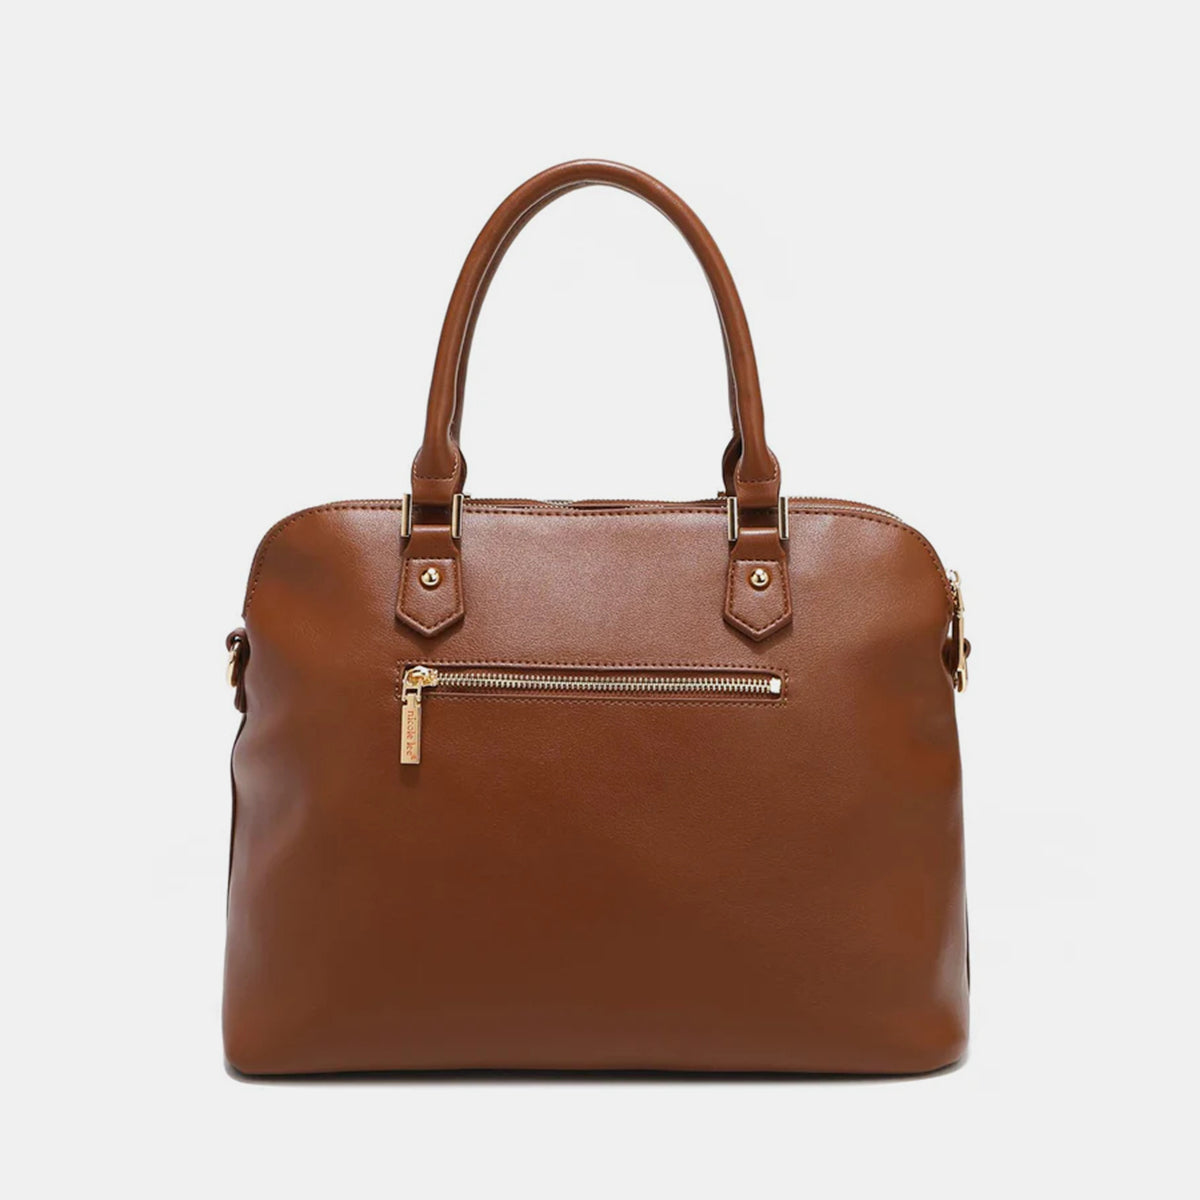 TEEK - NL Studded Decor Handbag BAG TEEK Trend   